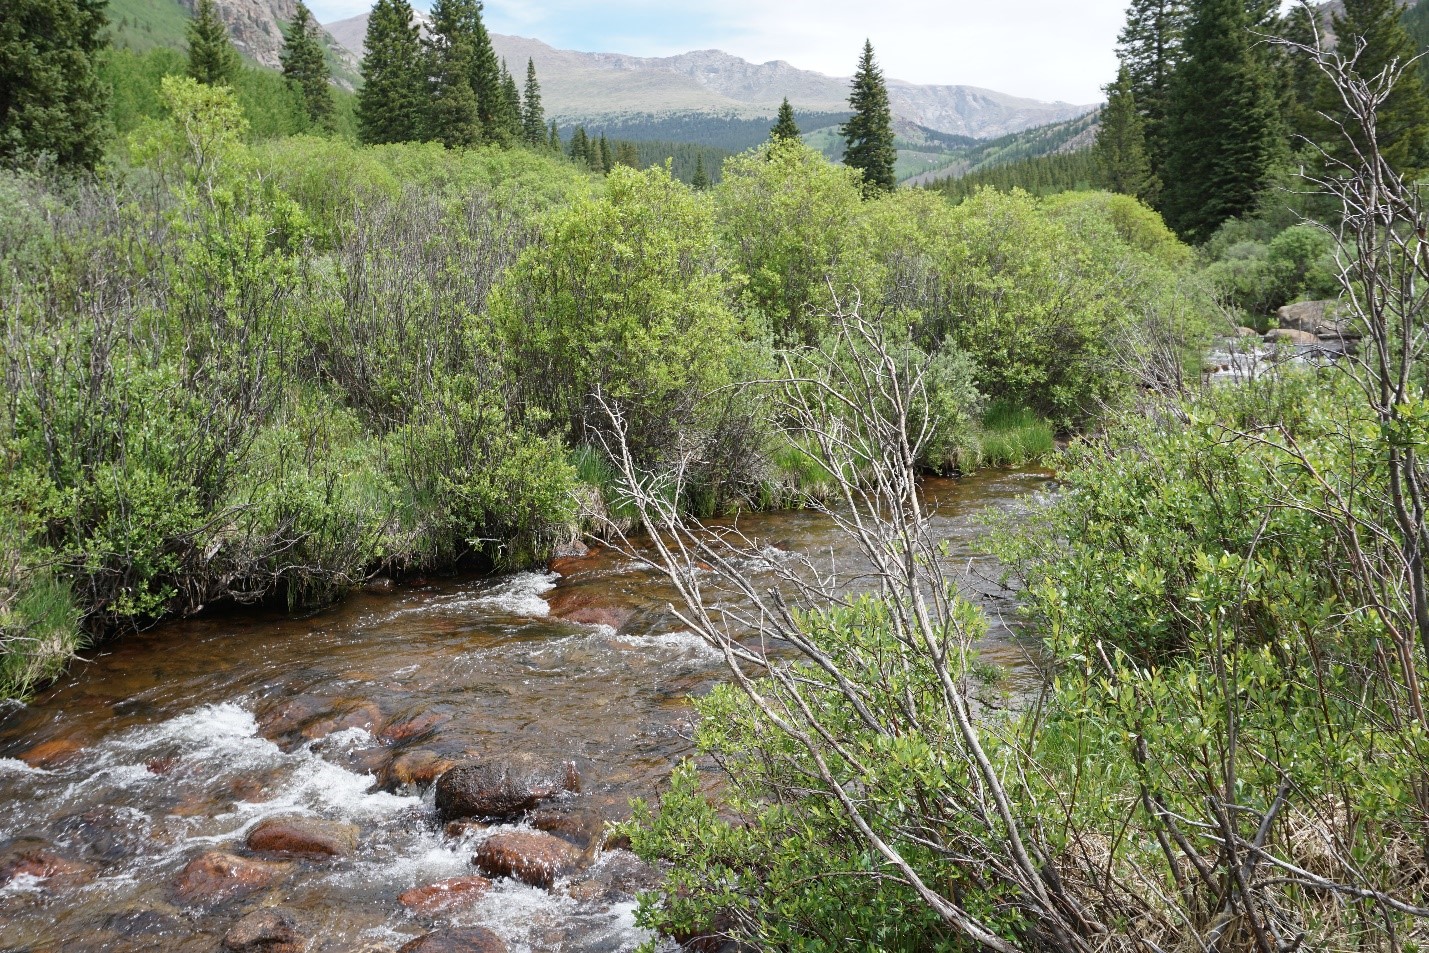 Scott Gomer Creek flows gently from high in the Mount Evans Wilderness Area.